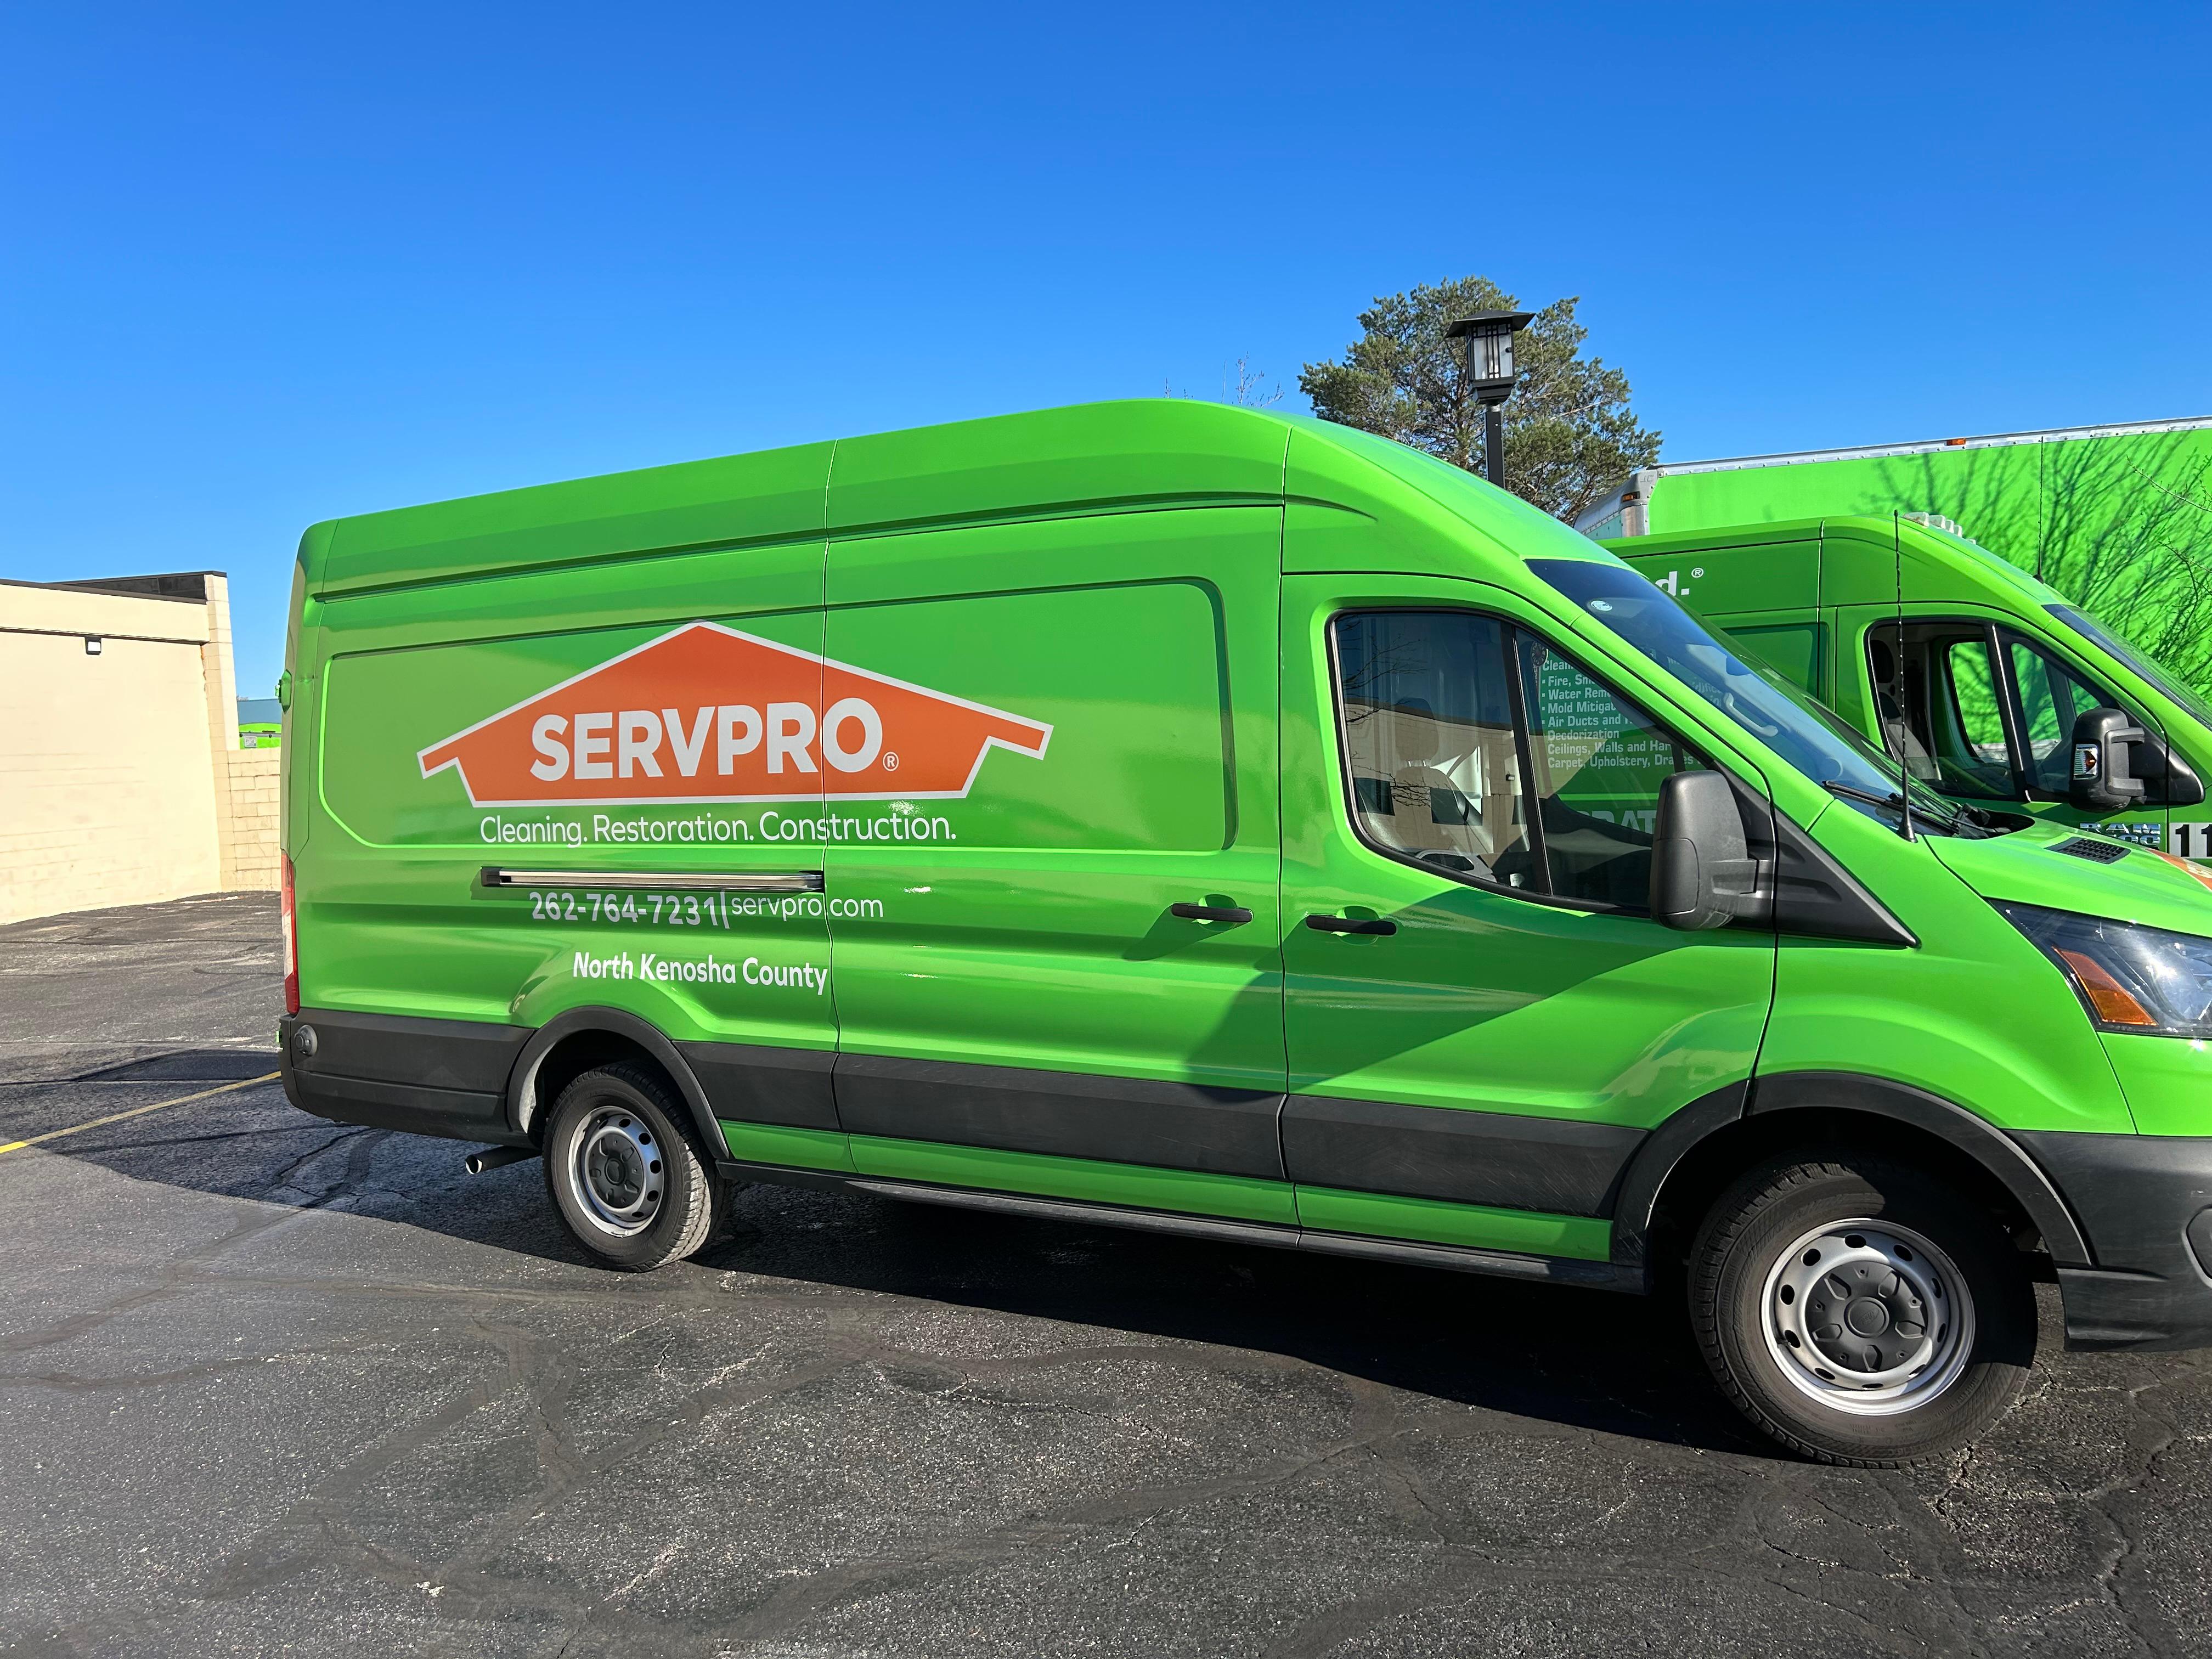 Sde view of a green SERVPRO van